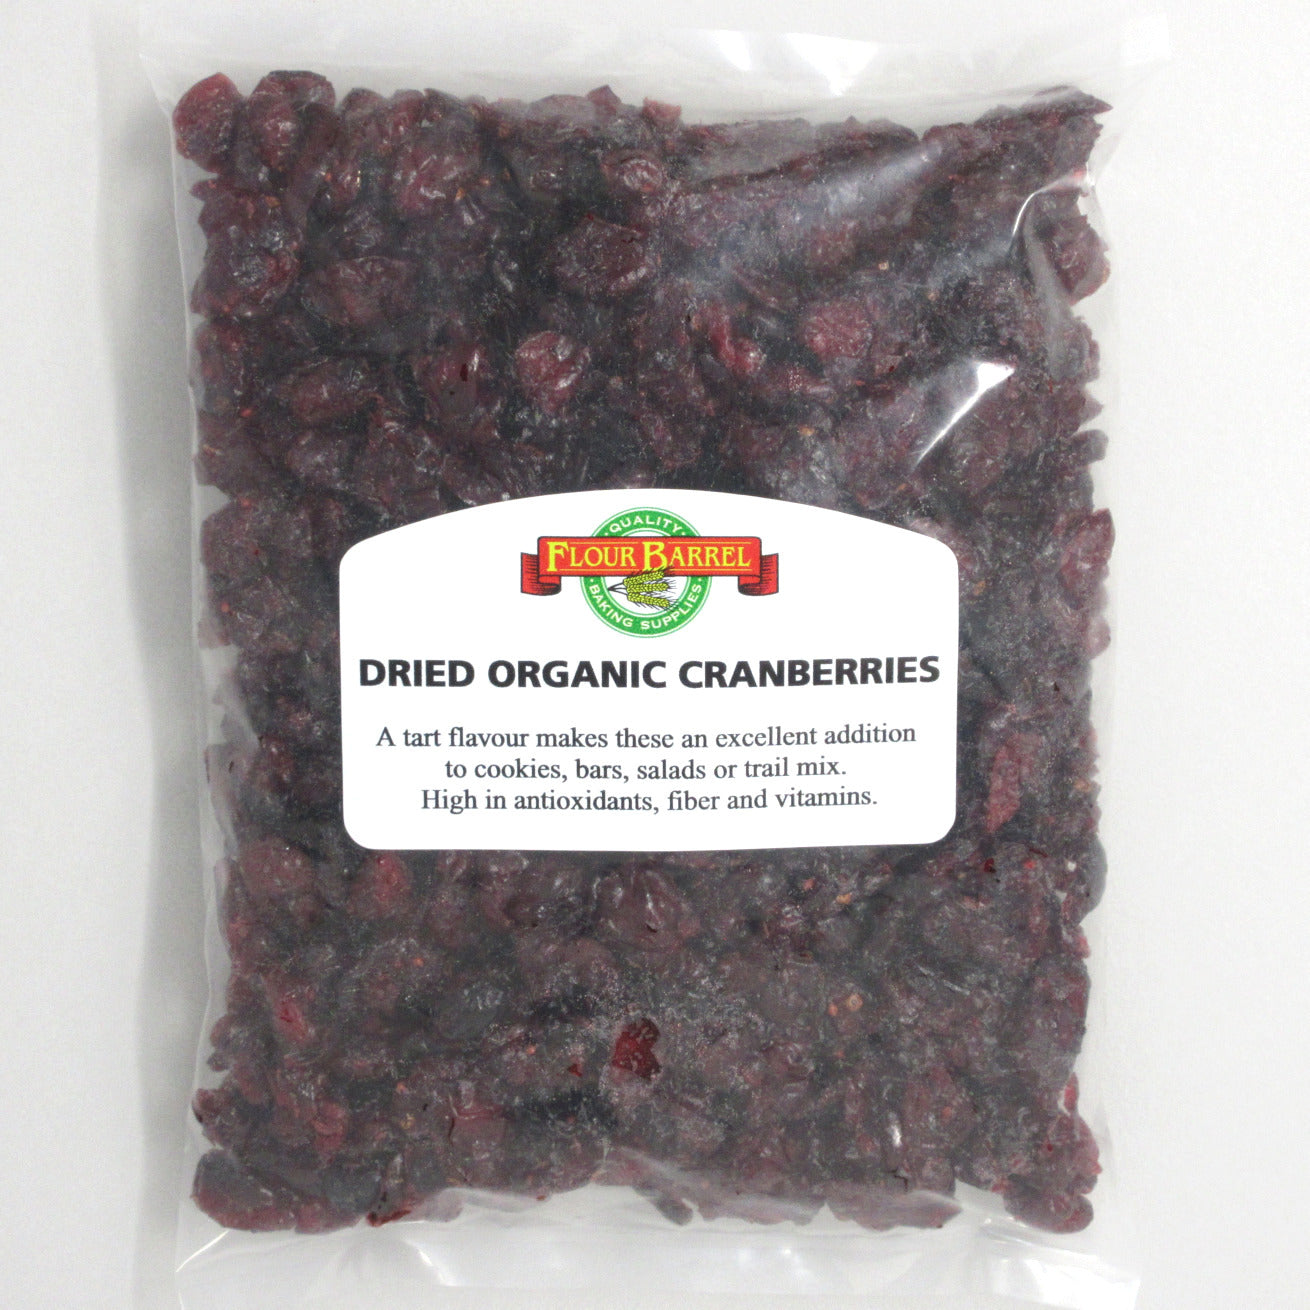 Flour Barrel product image - Dried Organic Cranberries